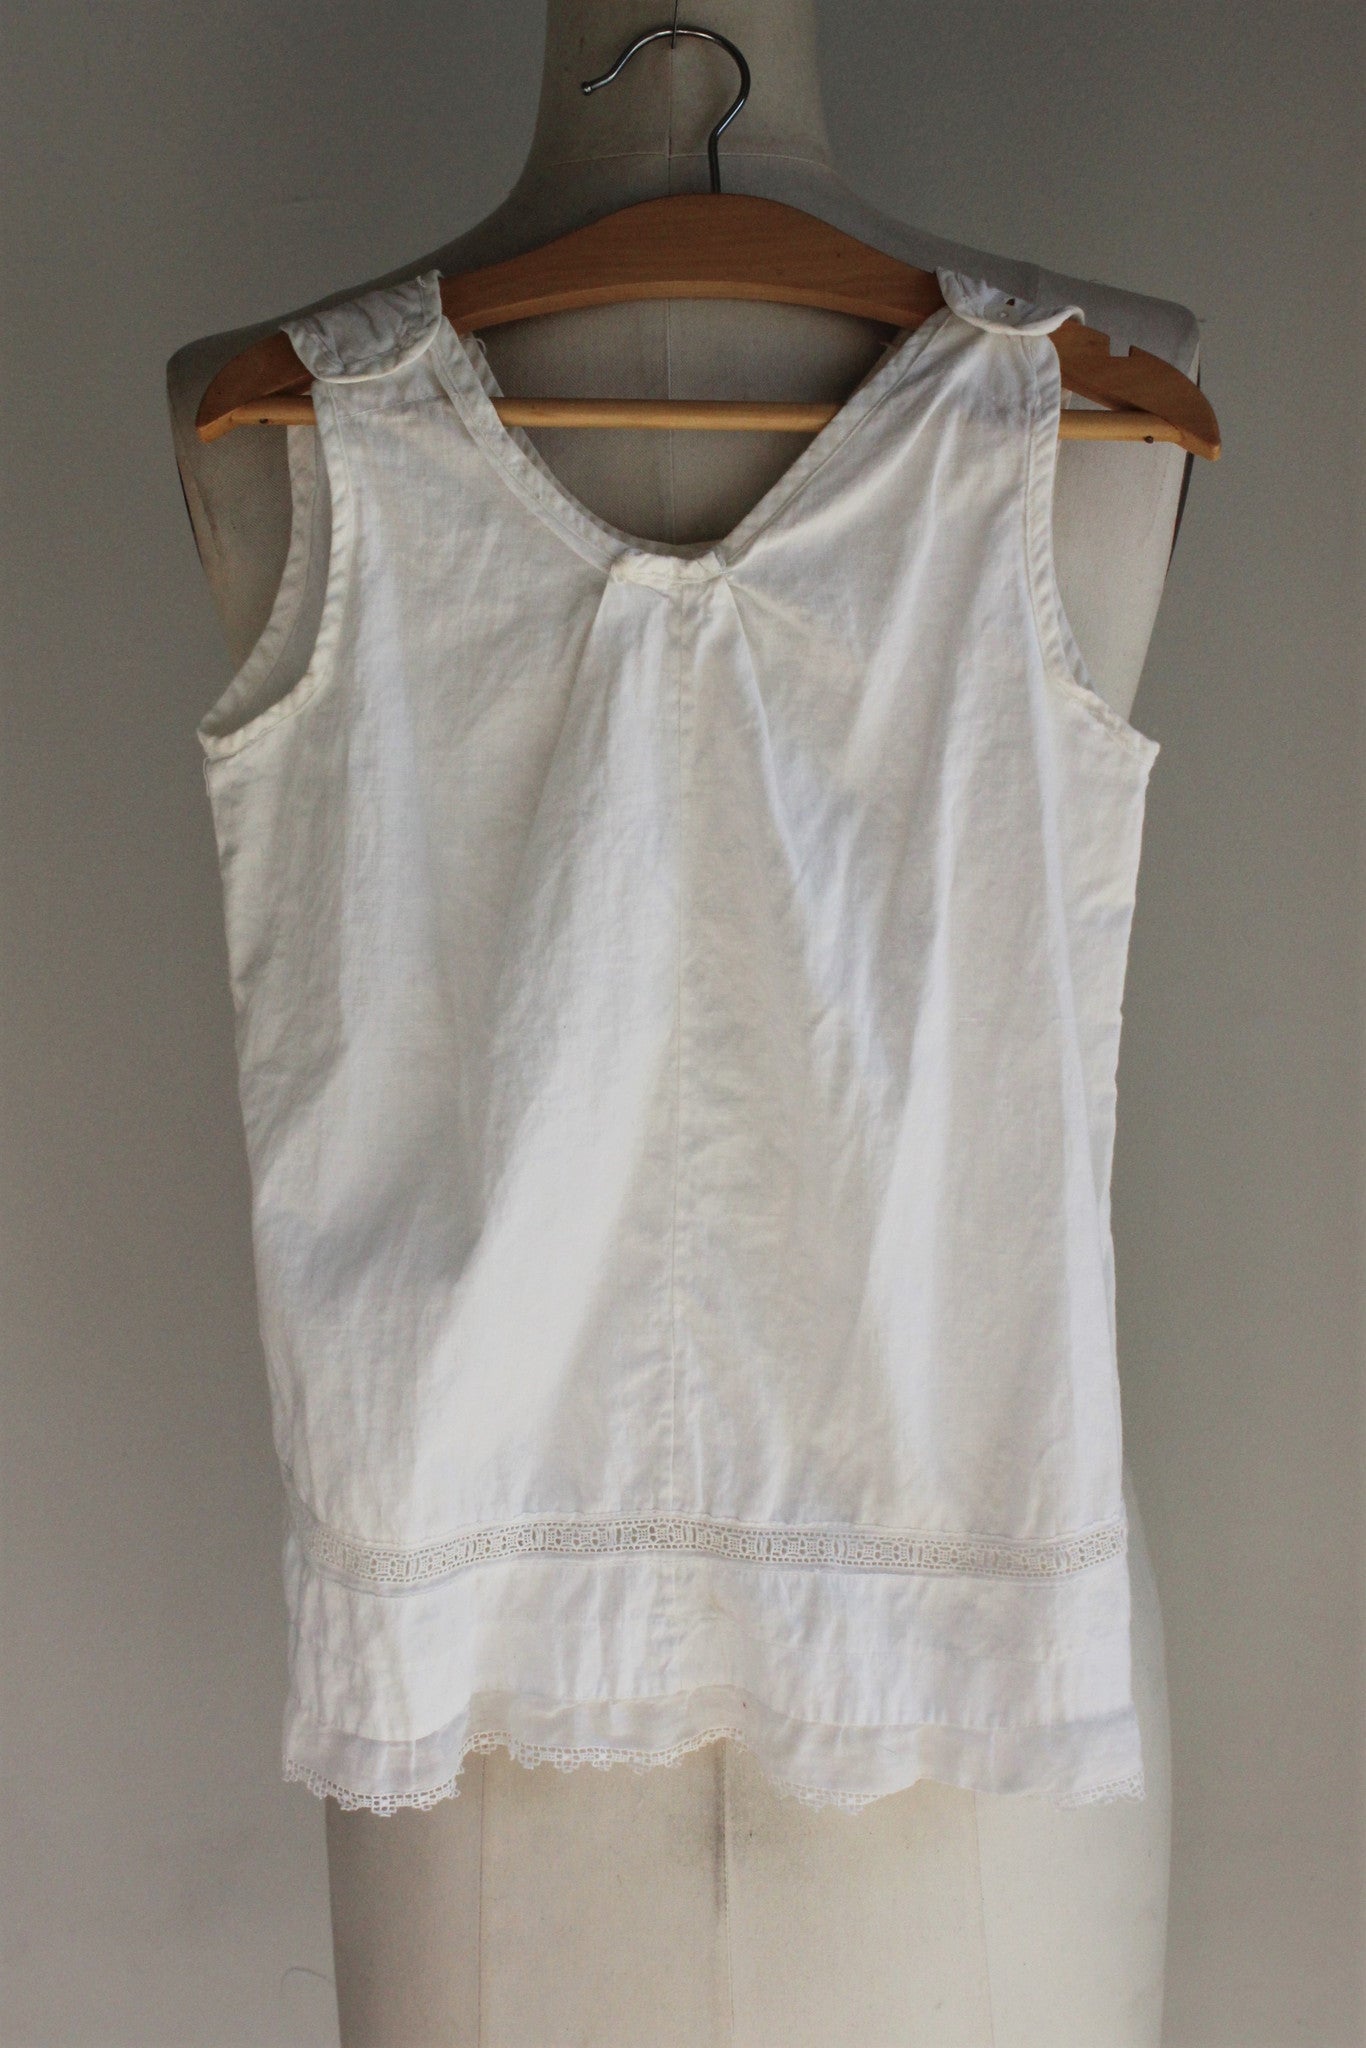 Vintage 1920s 1930s Girls White Cotton Dress